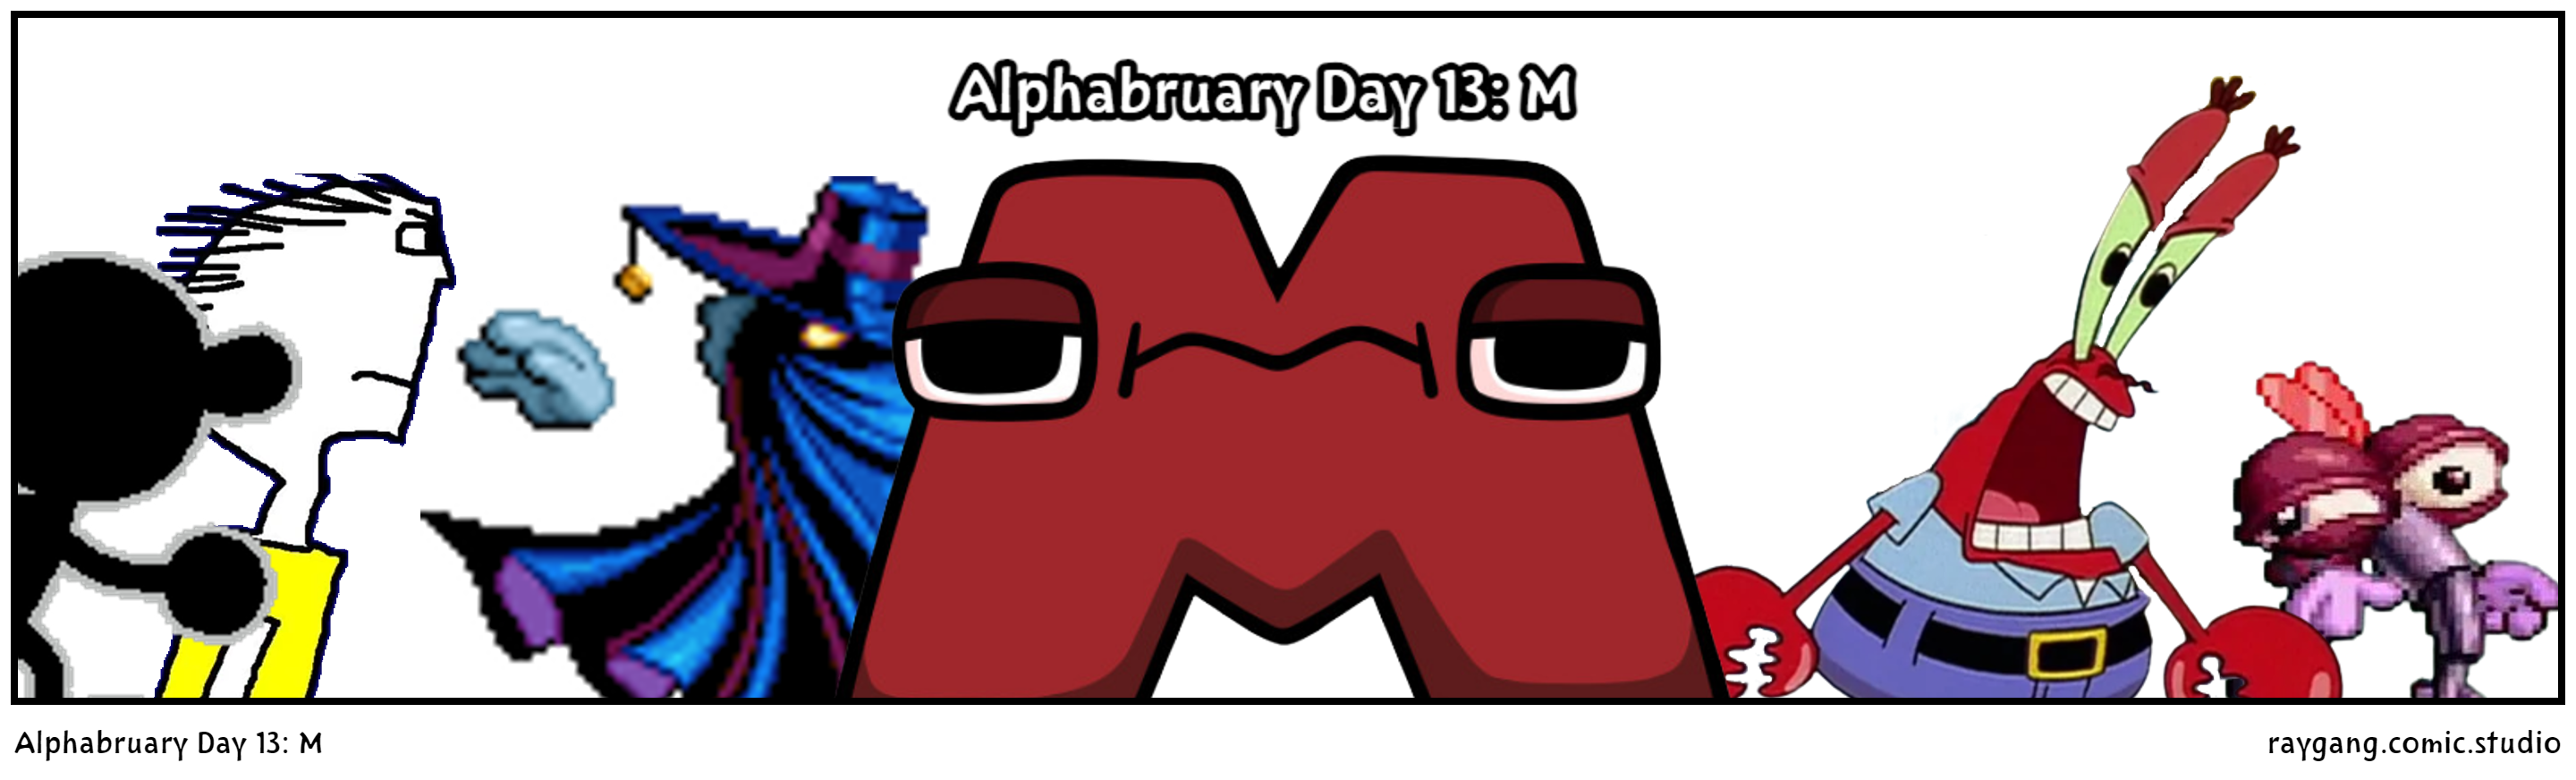 Alphabruary Day 13: M